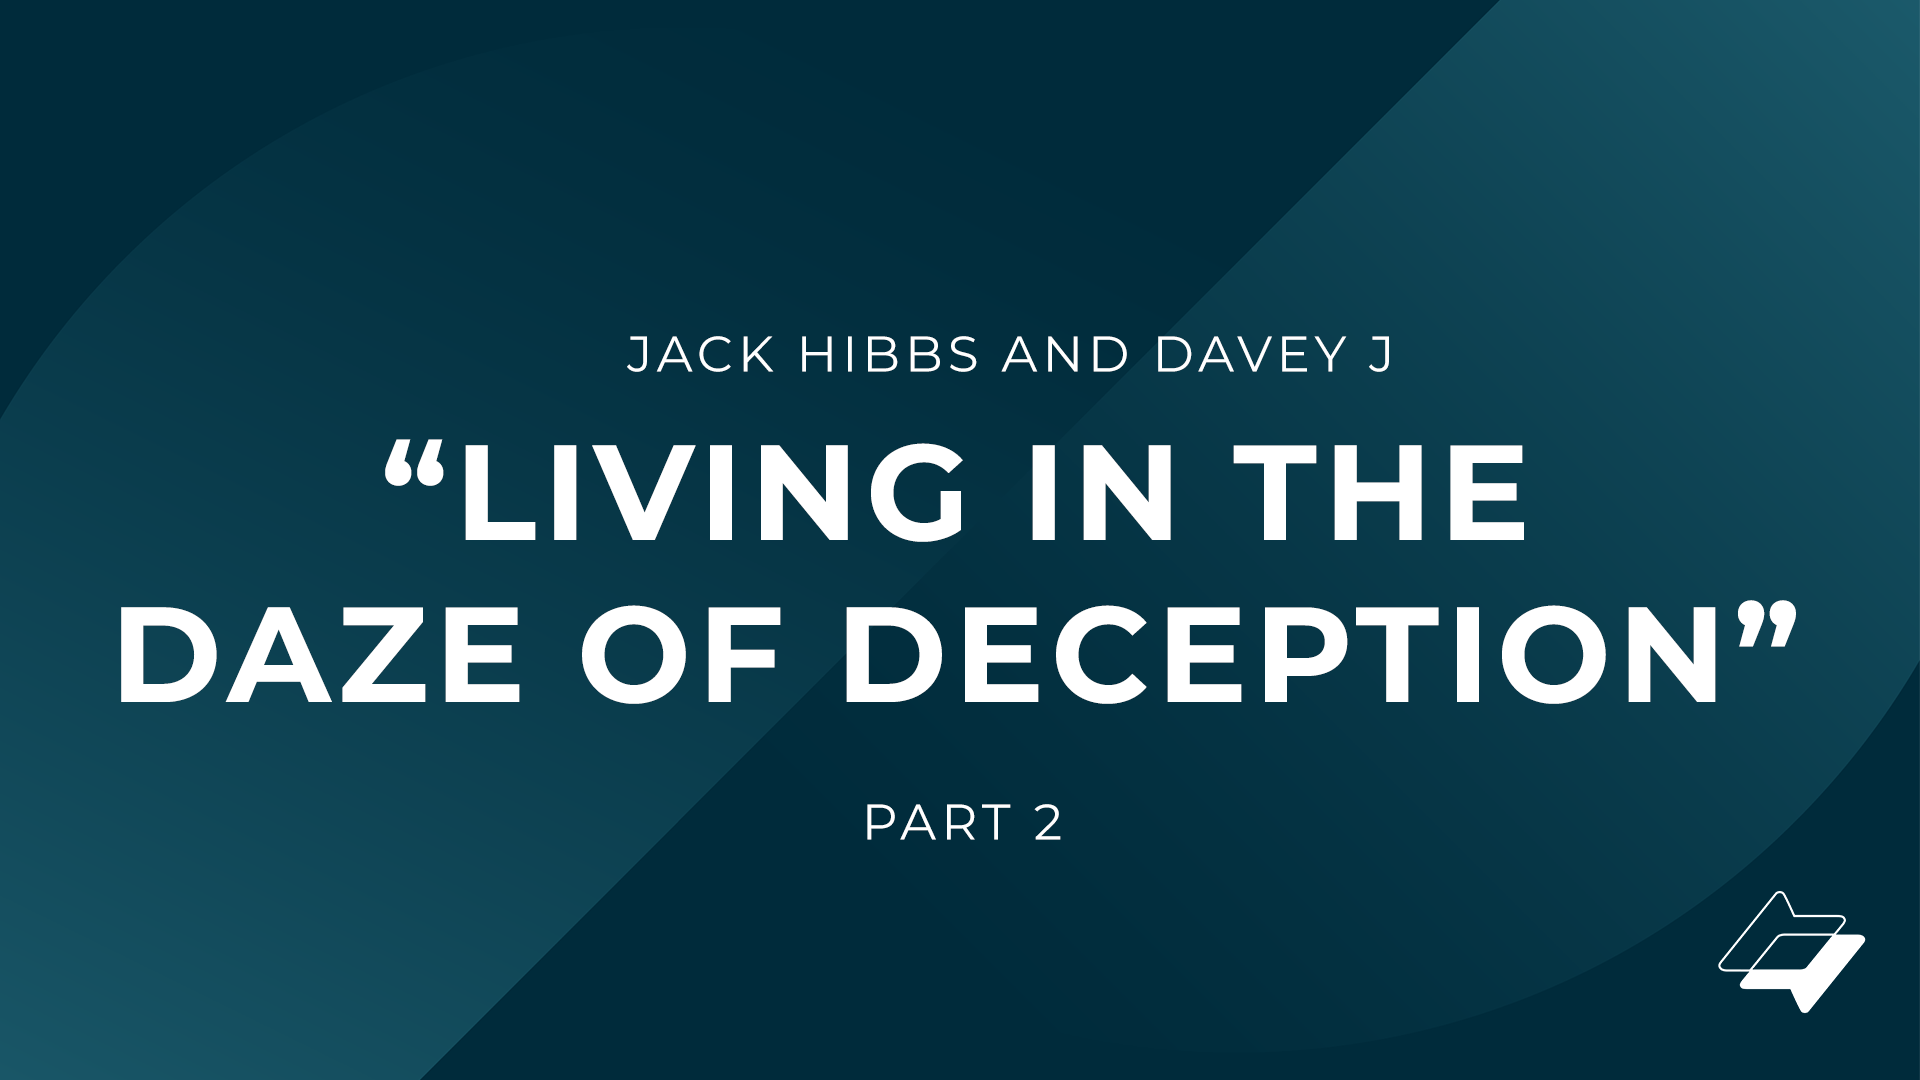 Jack Hibbs and Davey J regarding “Living in the Daze of Deception” – Part 2